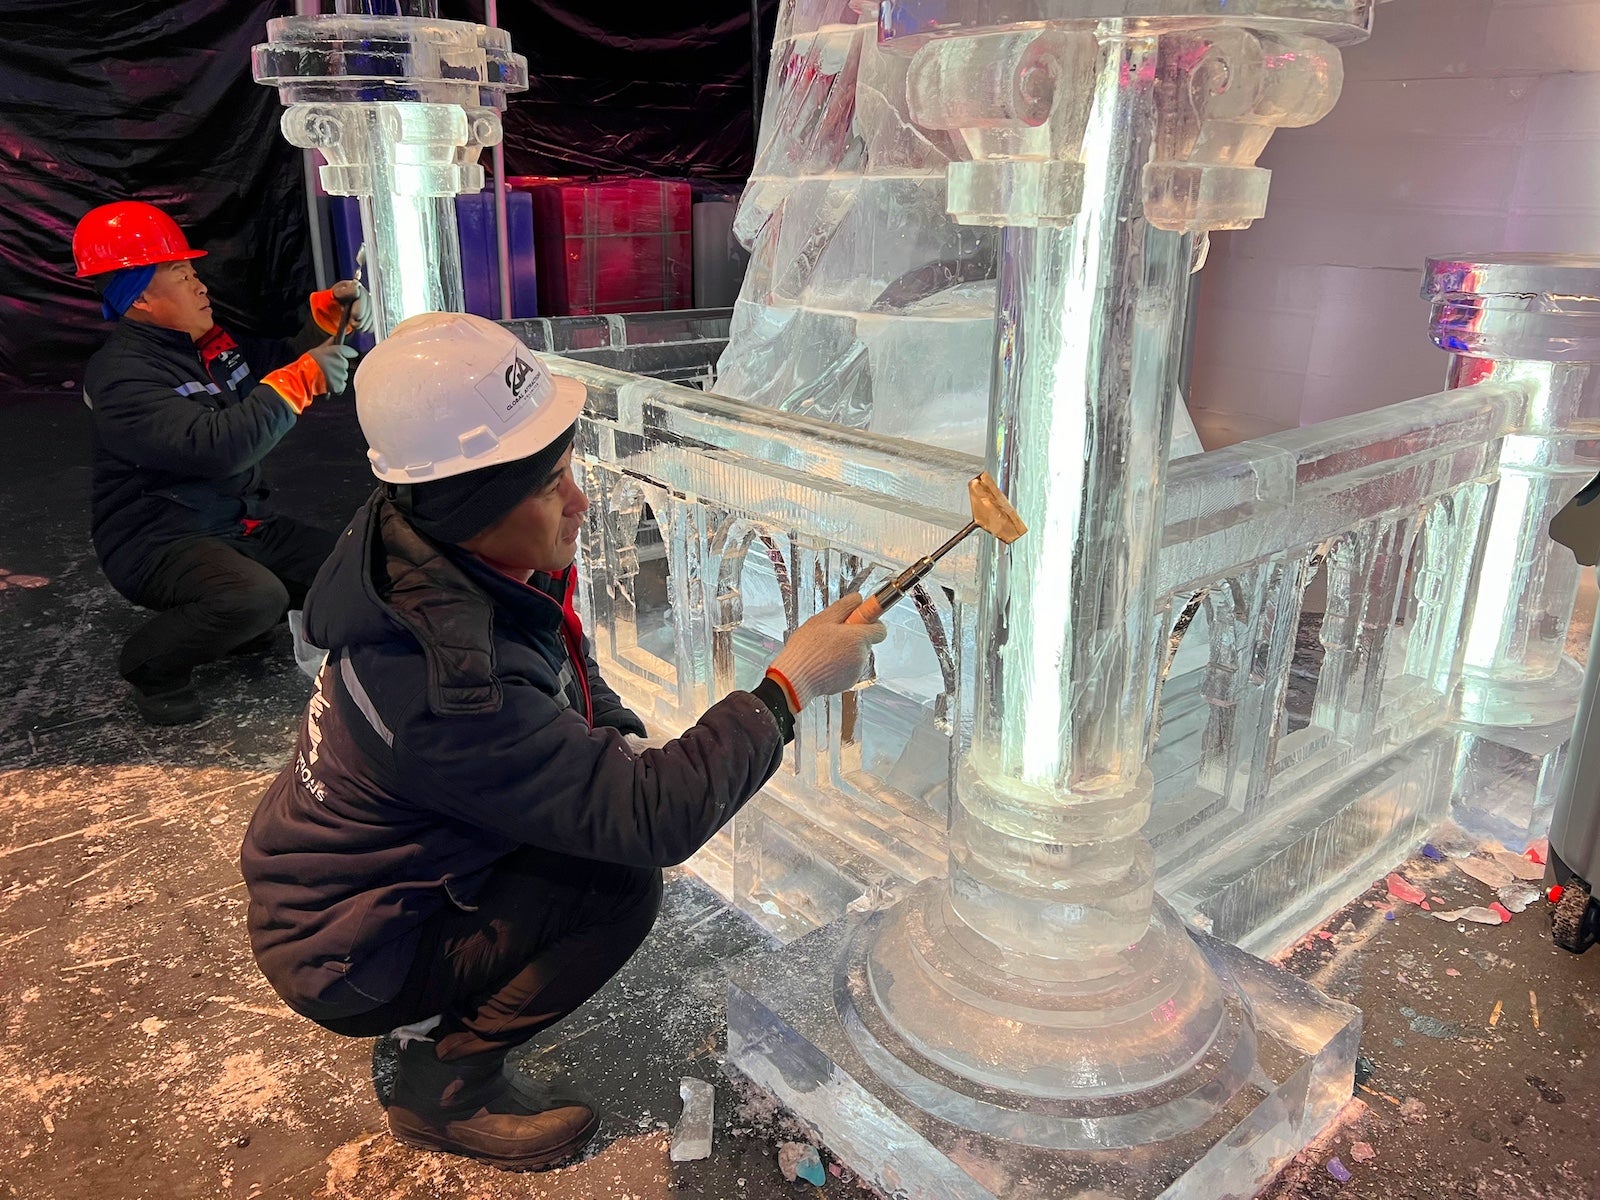 Ice carvers working on an Ice! display